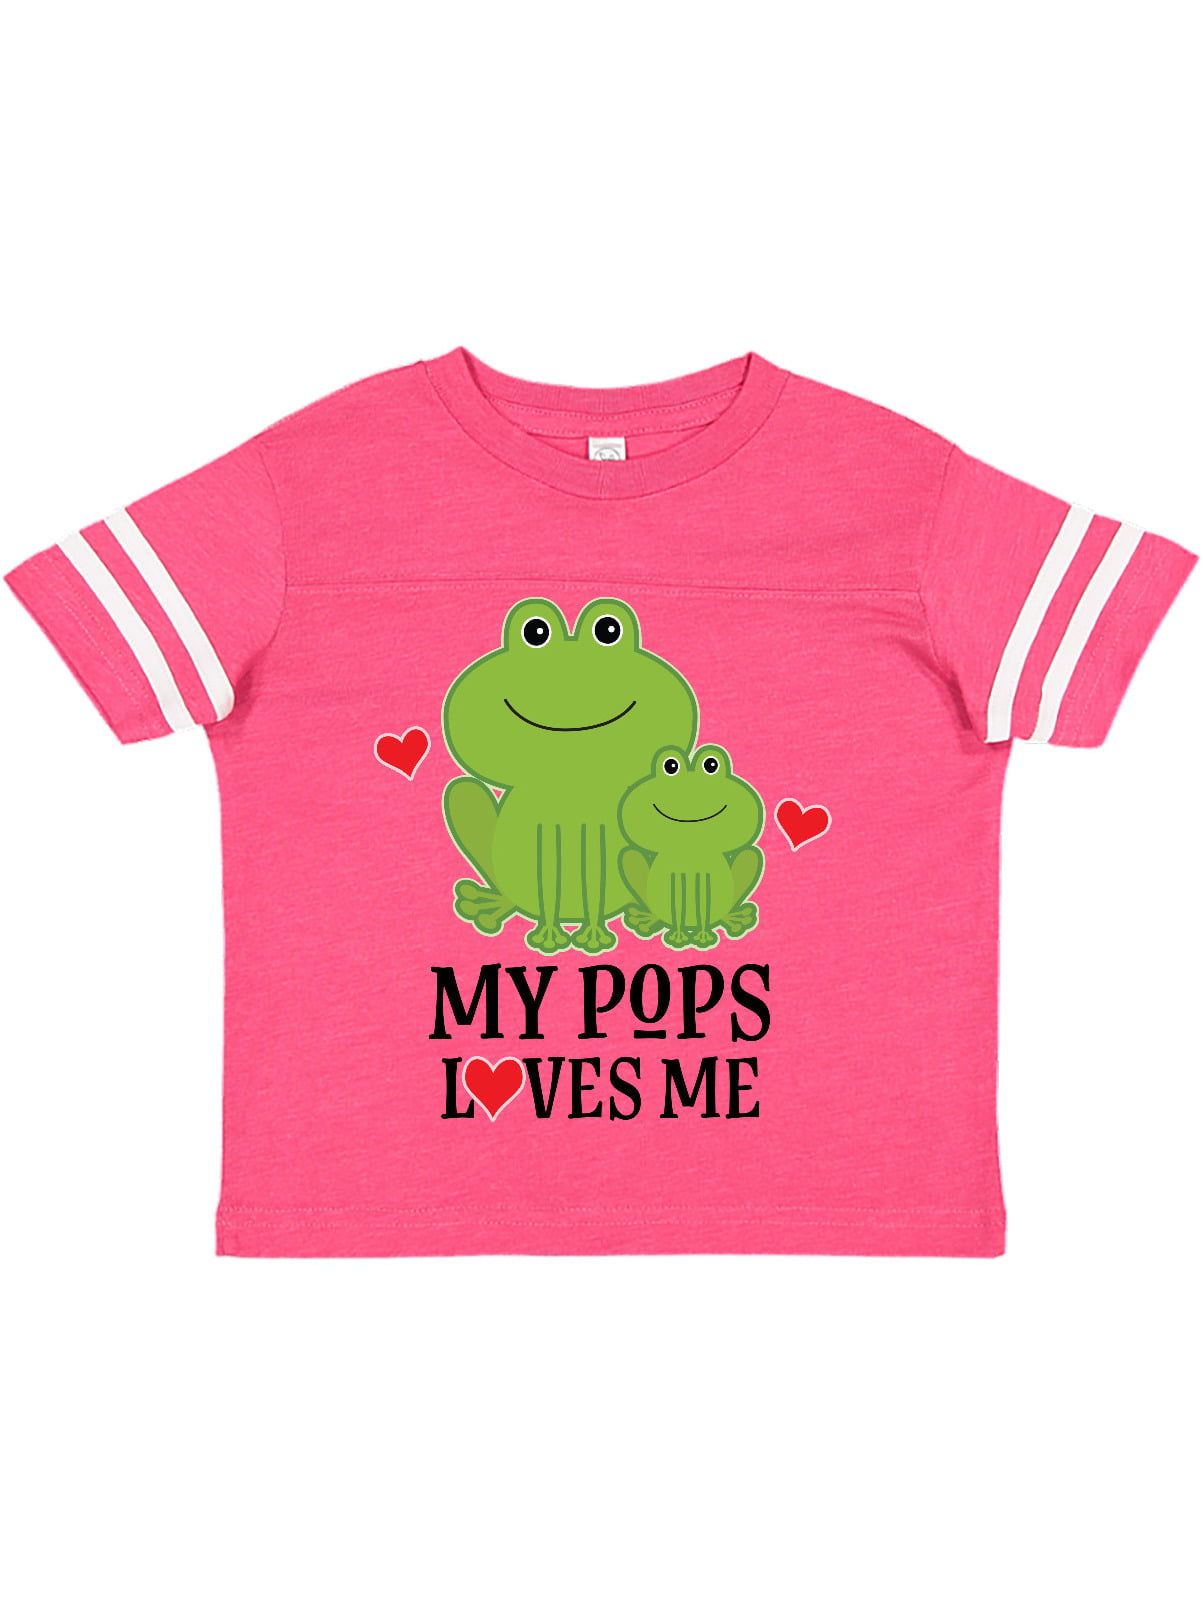 99 Volts I Heart Love Frogs Big Boys Kids Tee Shirt